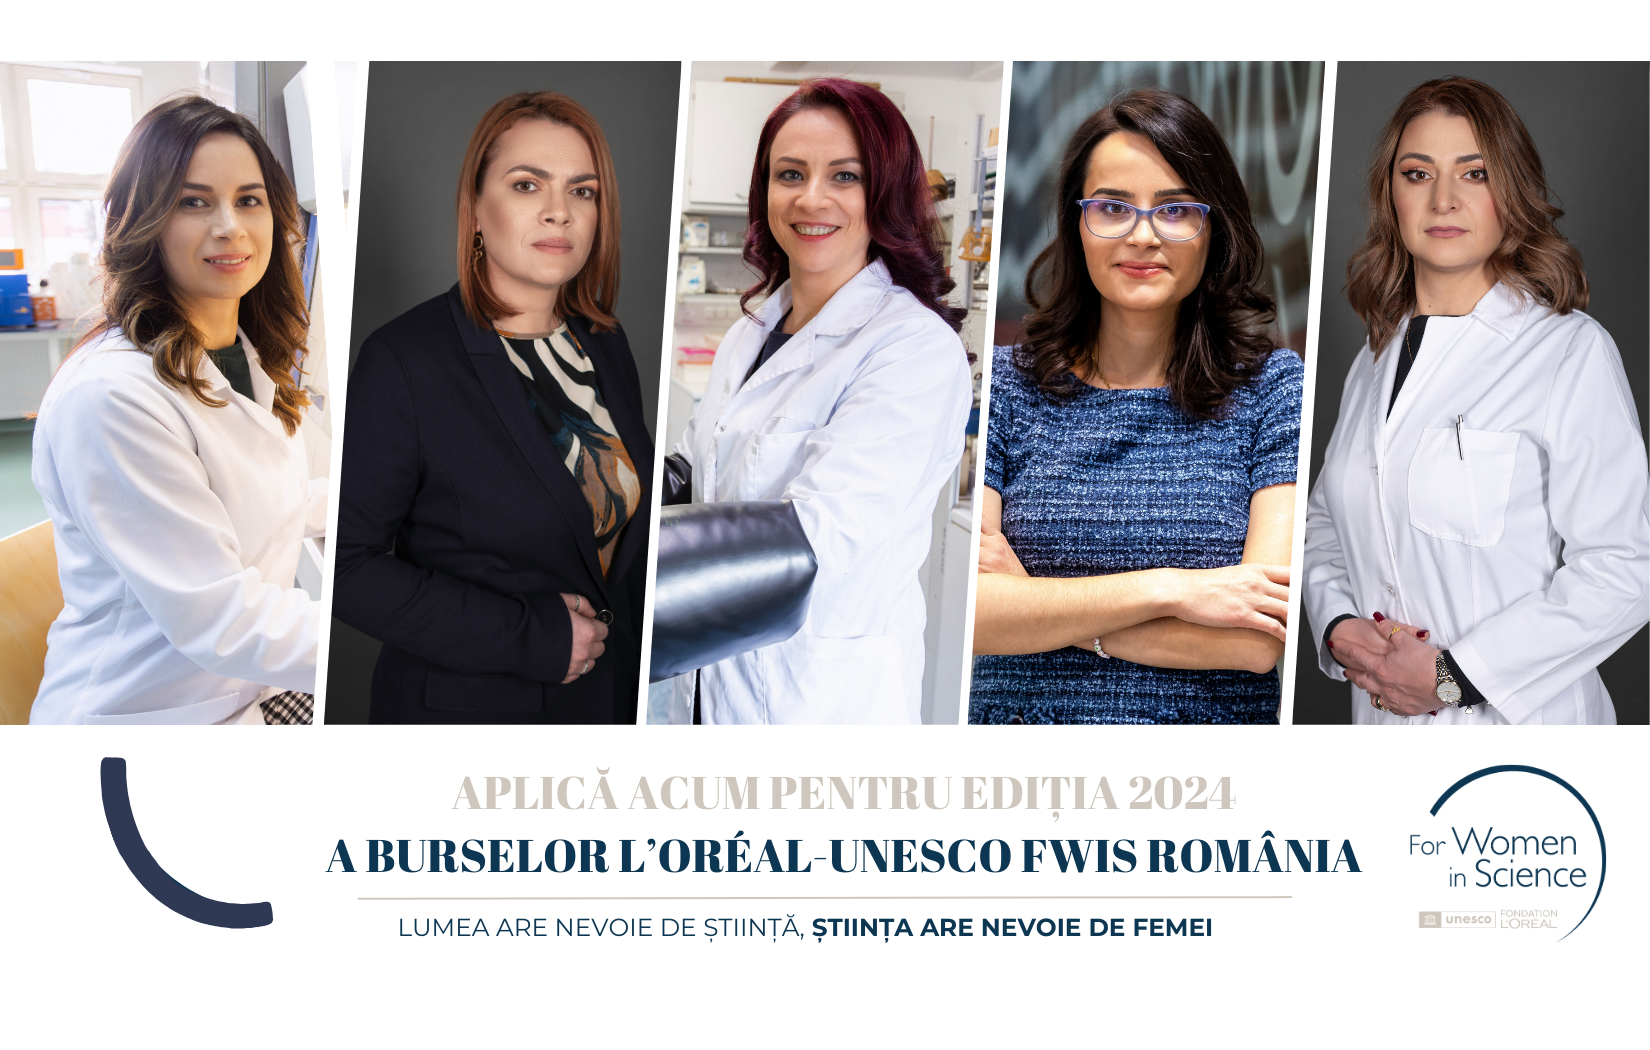 L’Oréal - UNESCO ”For Women in Science” International Awards 2025